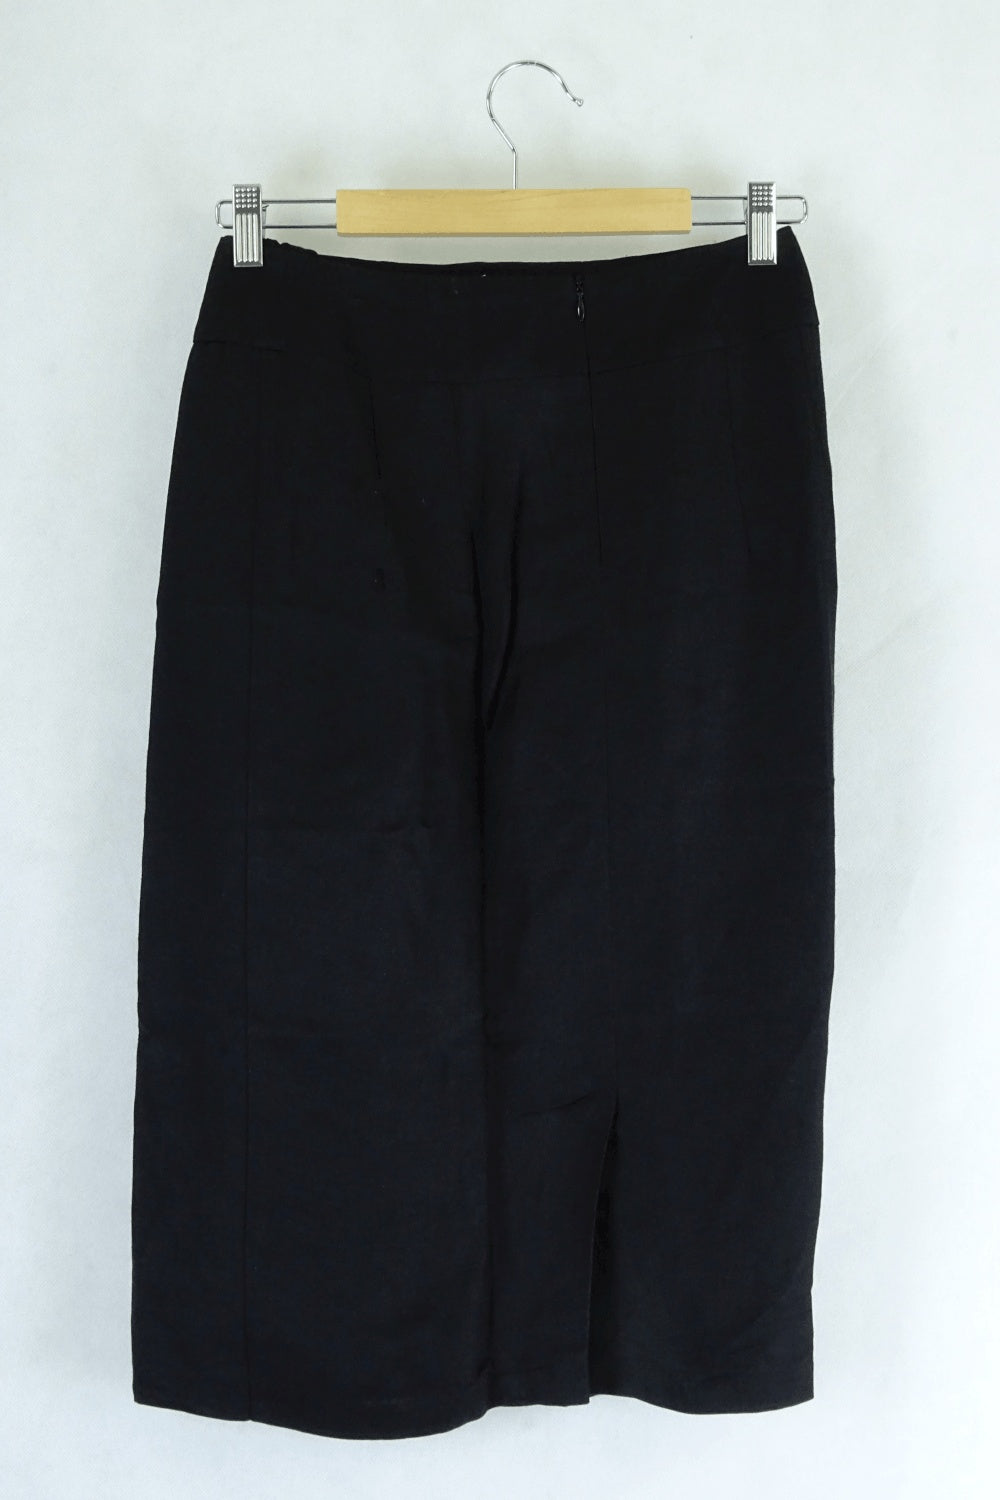 Veronika Maine Black Pencil Skirt 6